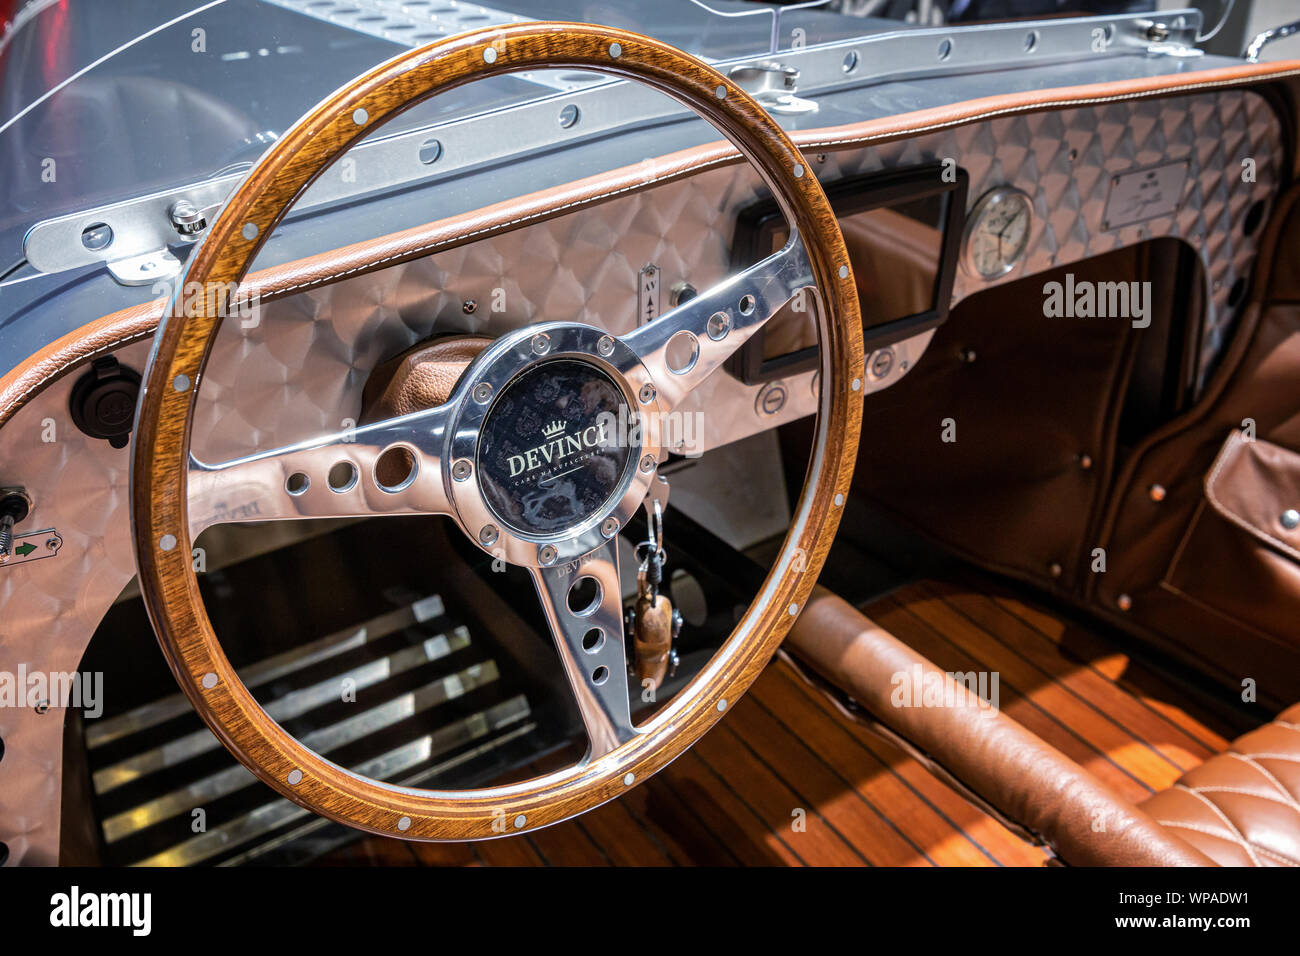 Devinci oldtimers steering wheel, Geneva Motor Show, Geneva, Switzerland Stock Photo